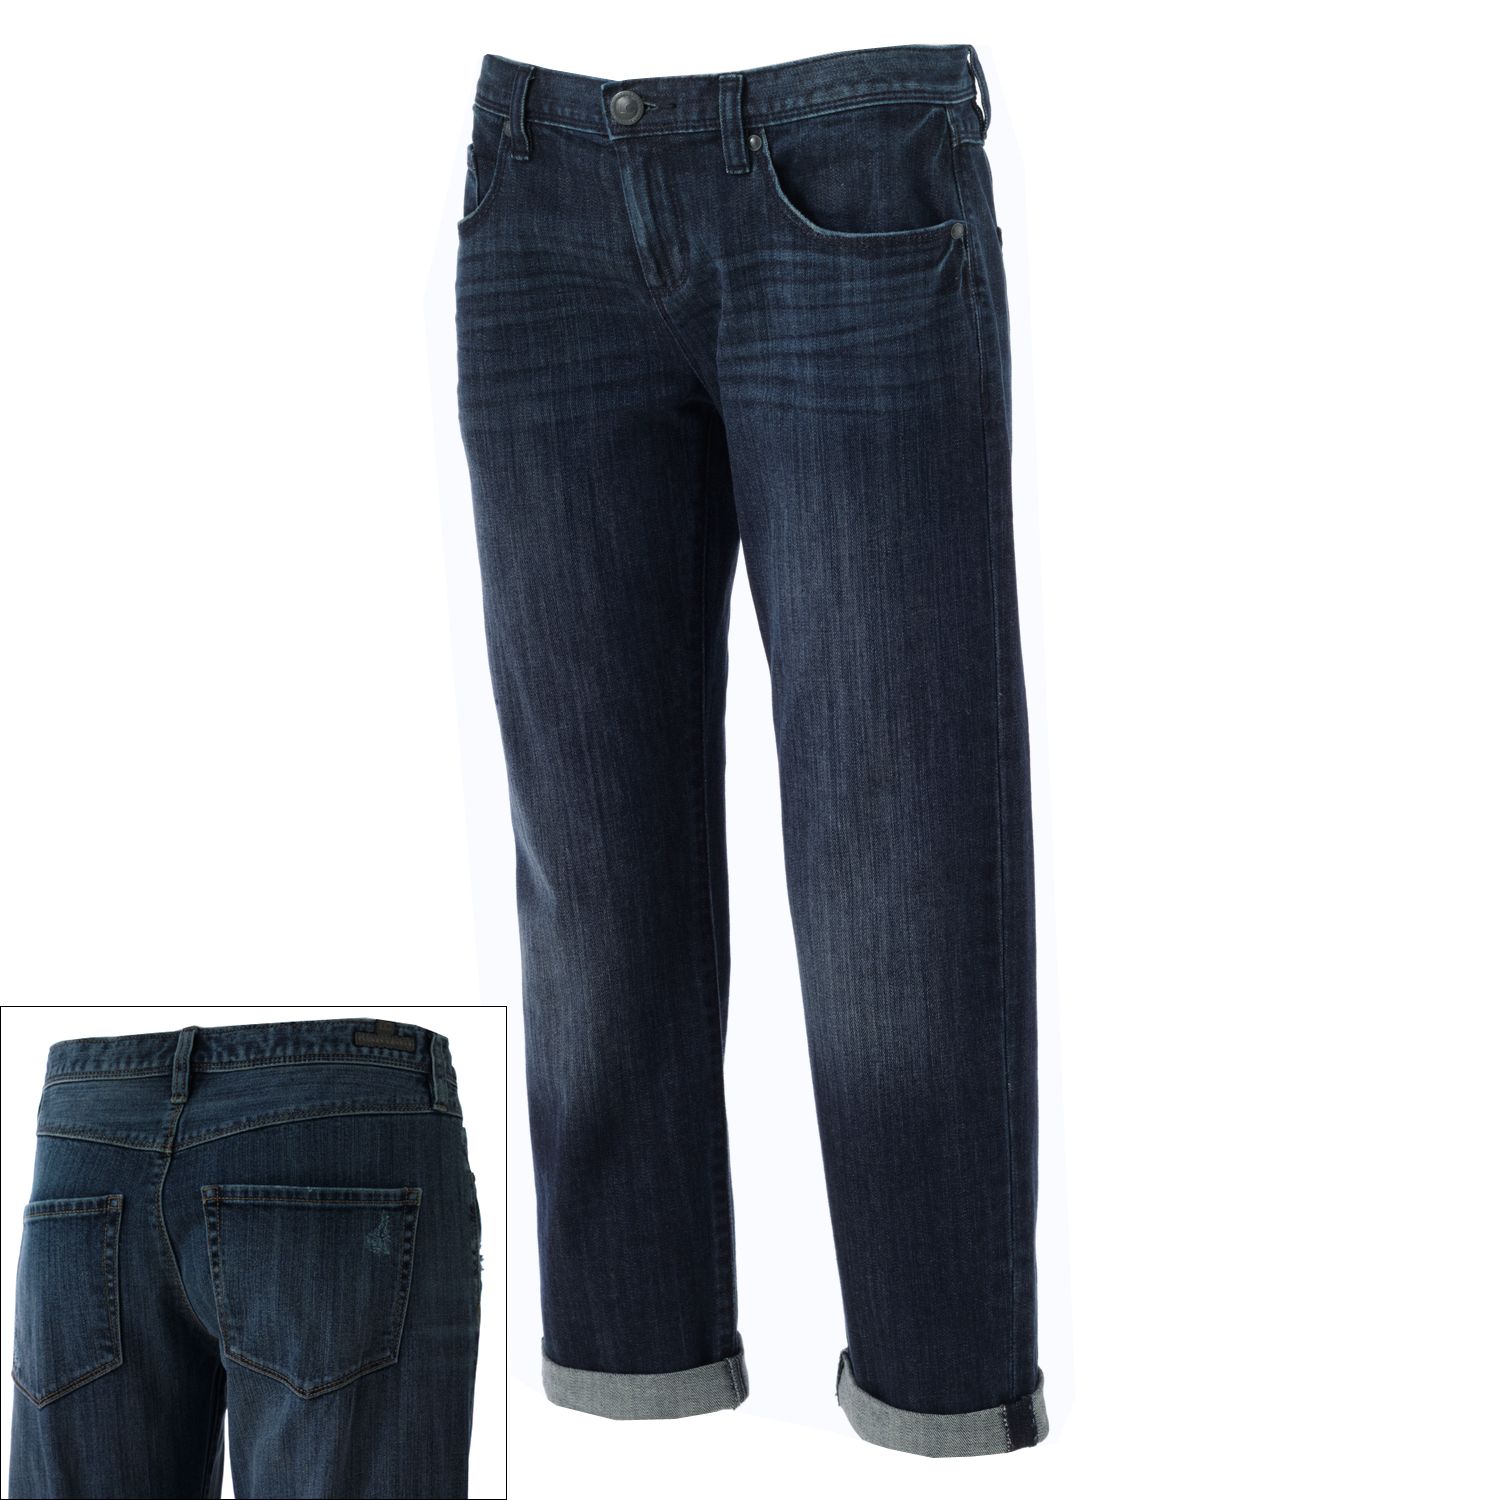 lauren conrad jeans at kohls